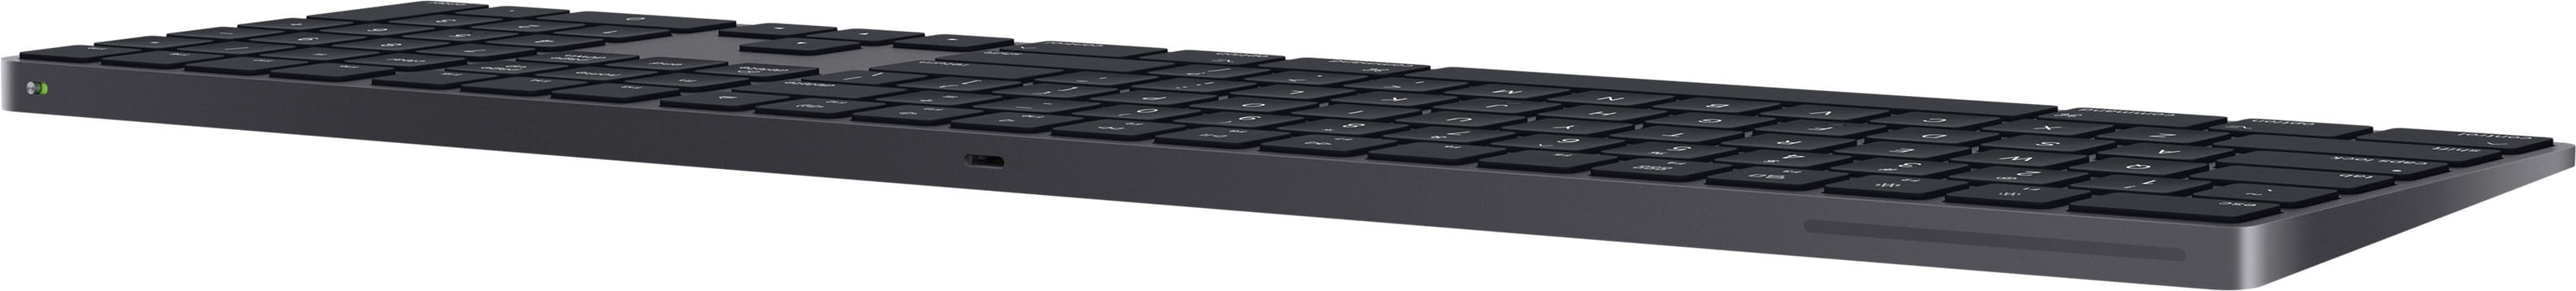 Apple Magic Keyboard MRMH2RS/A / with Numeric Keypad / Grey